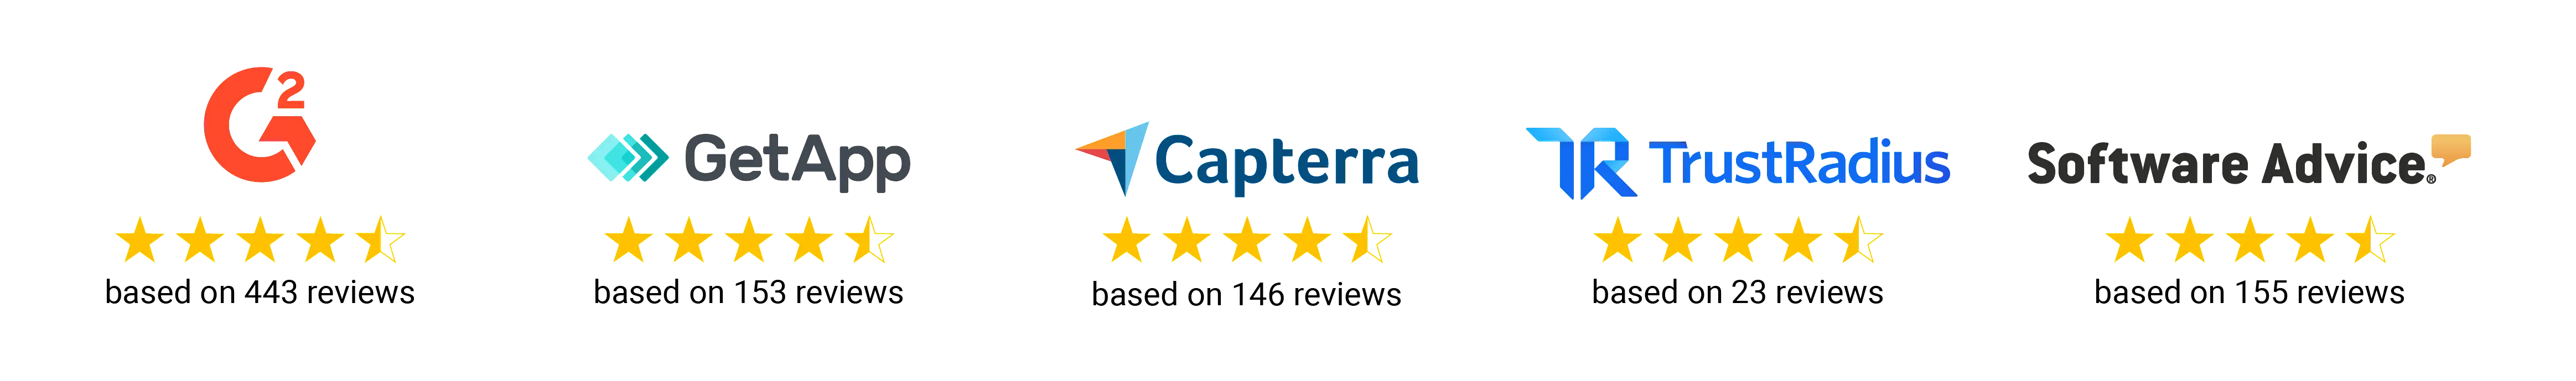 Serpstat reviews